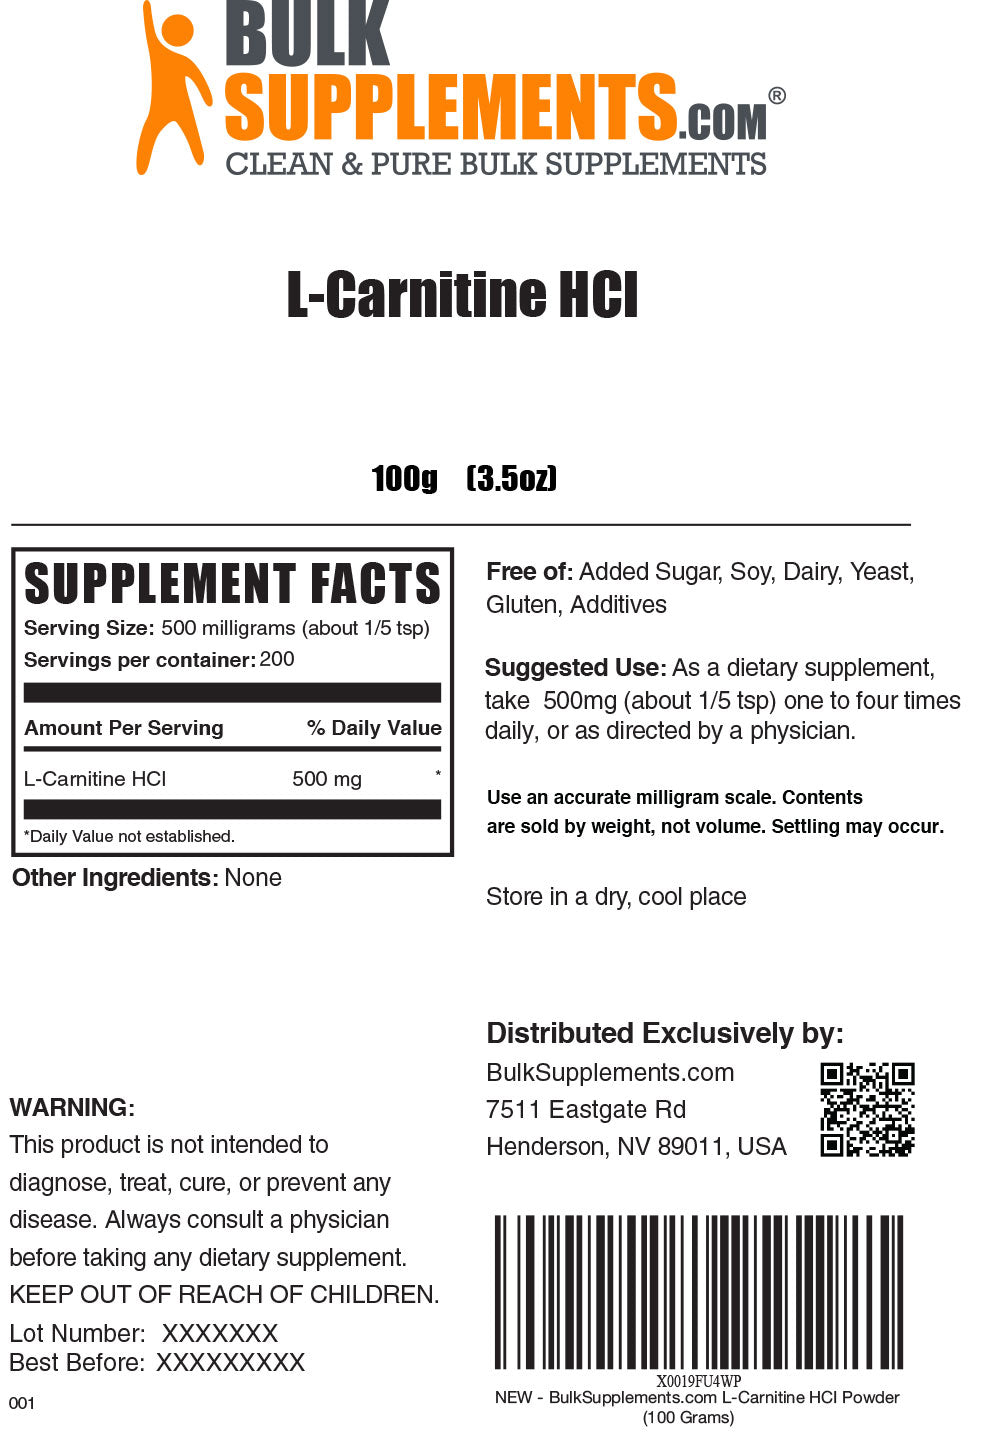 L-Carnitine HCl powder label 100g